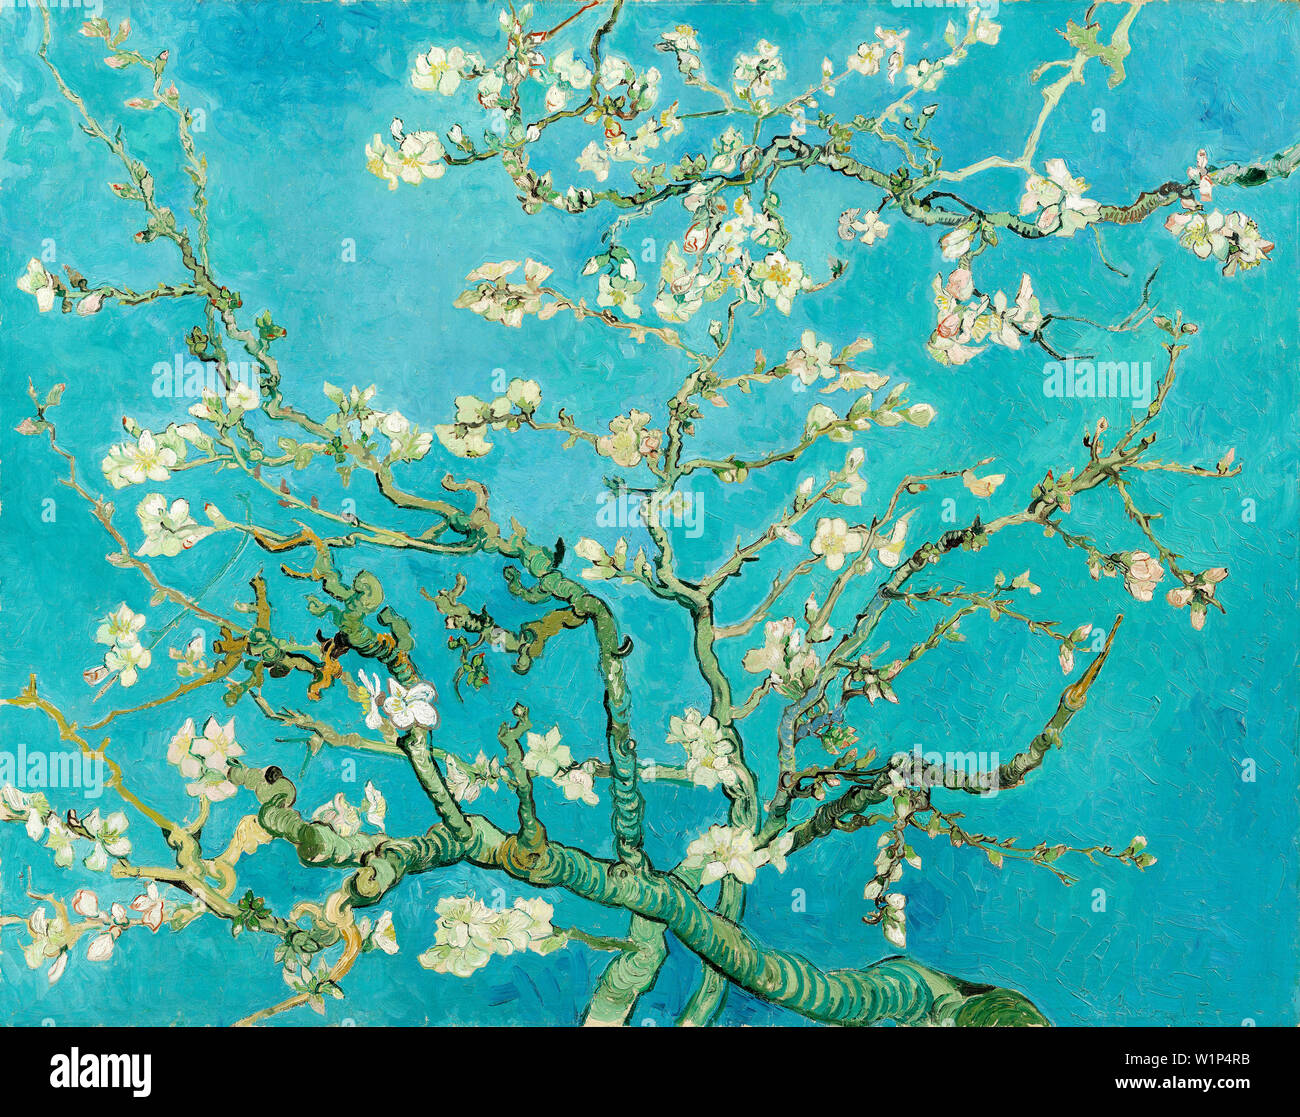 Vincent Van Gogh, Almond Blossom, Post Impressionist painting, 1890 Stock Photo